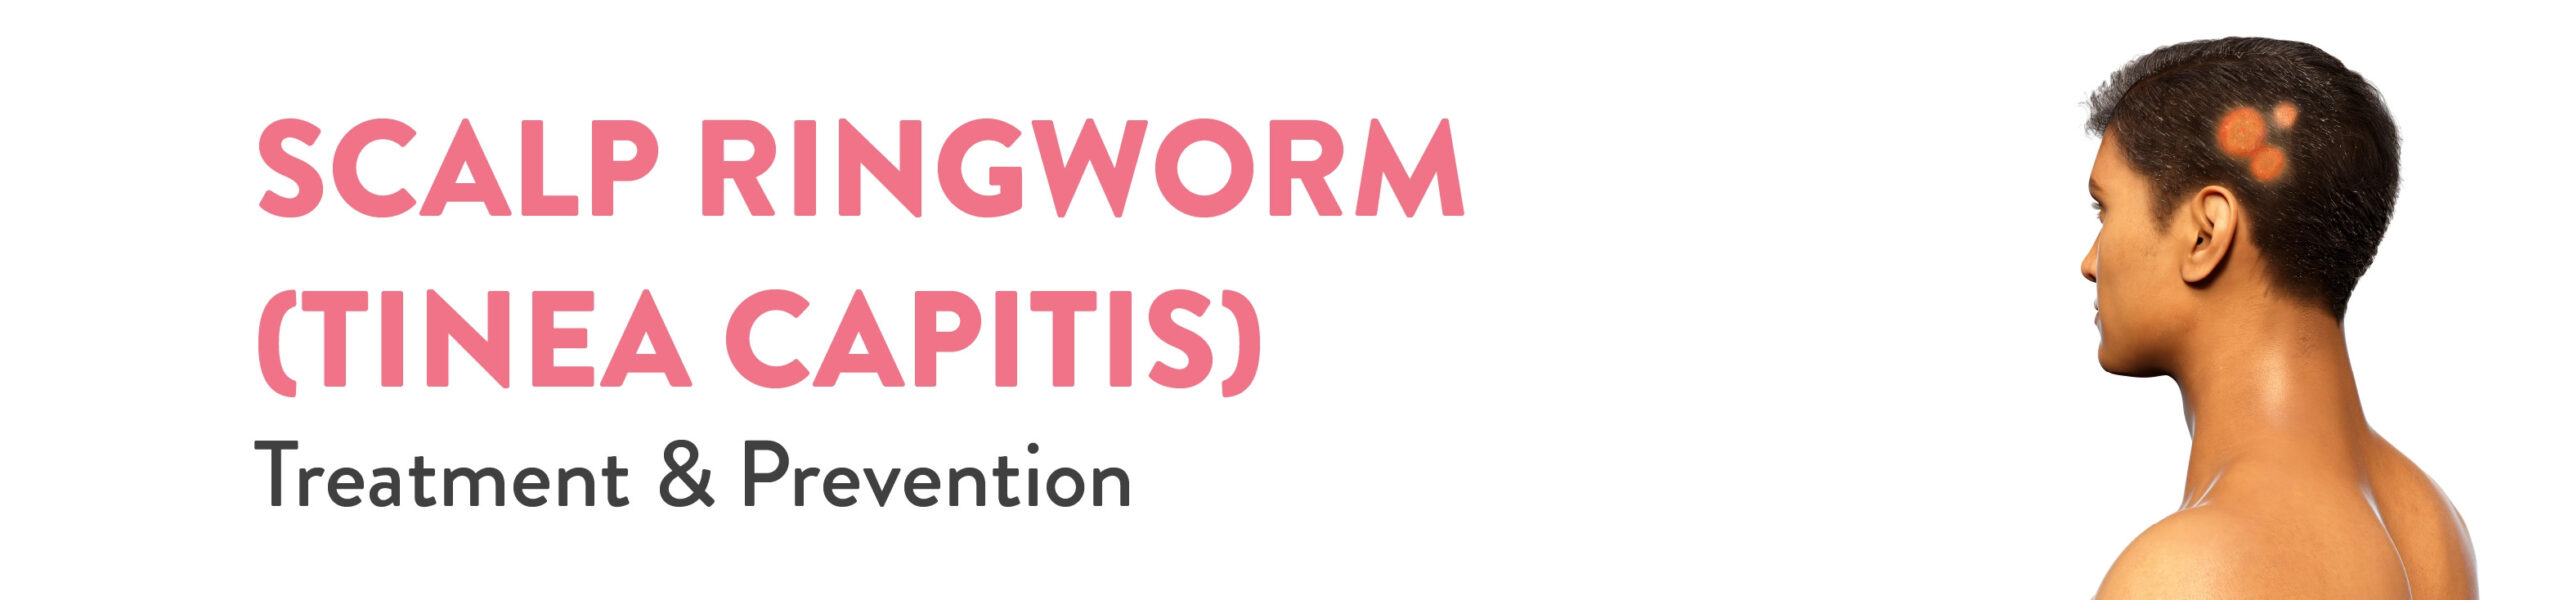 ringworm prevention